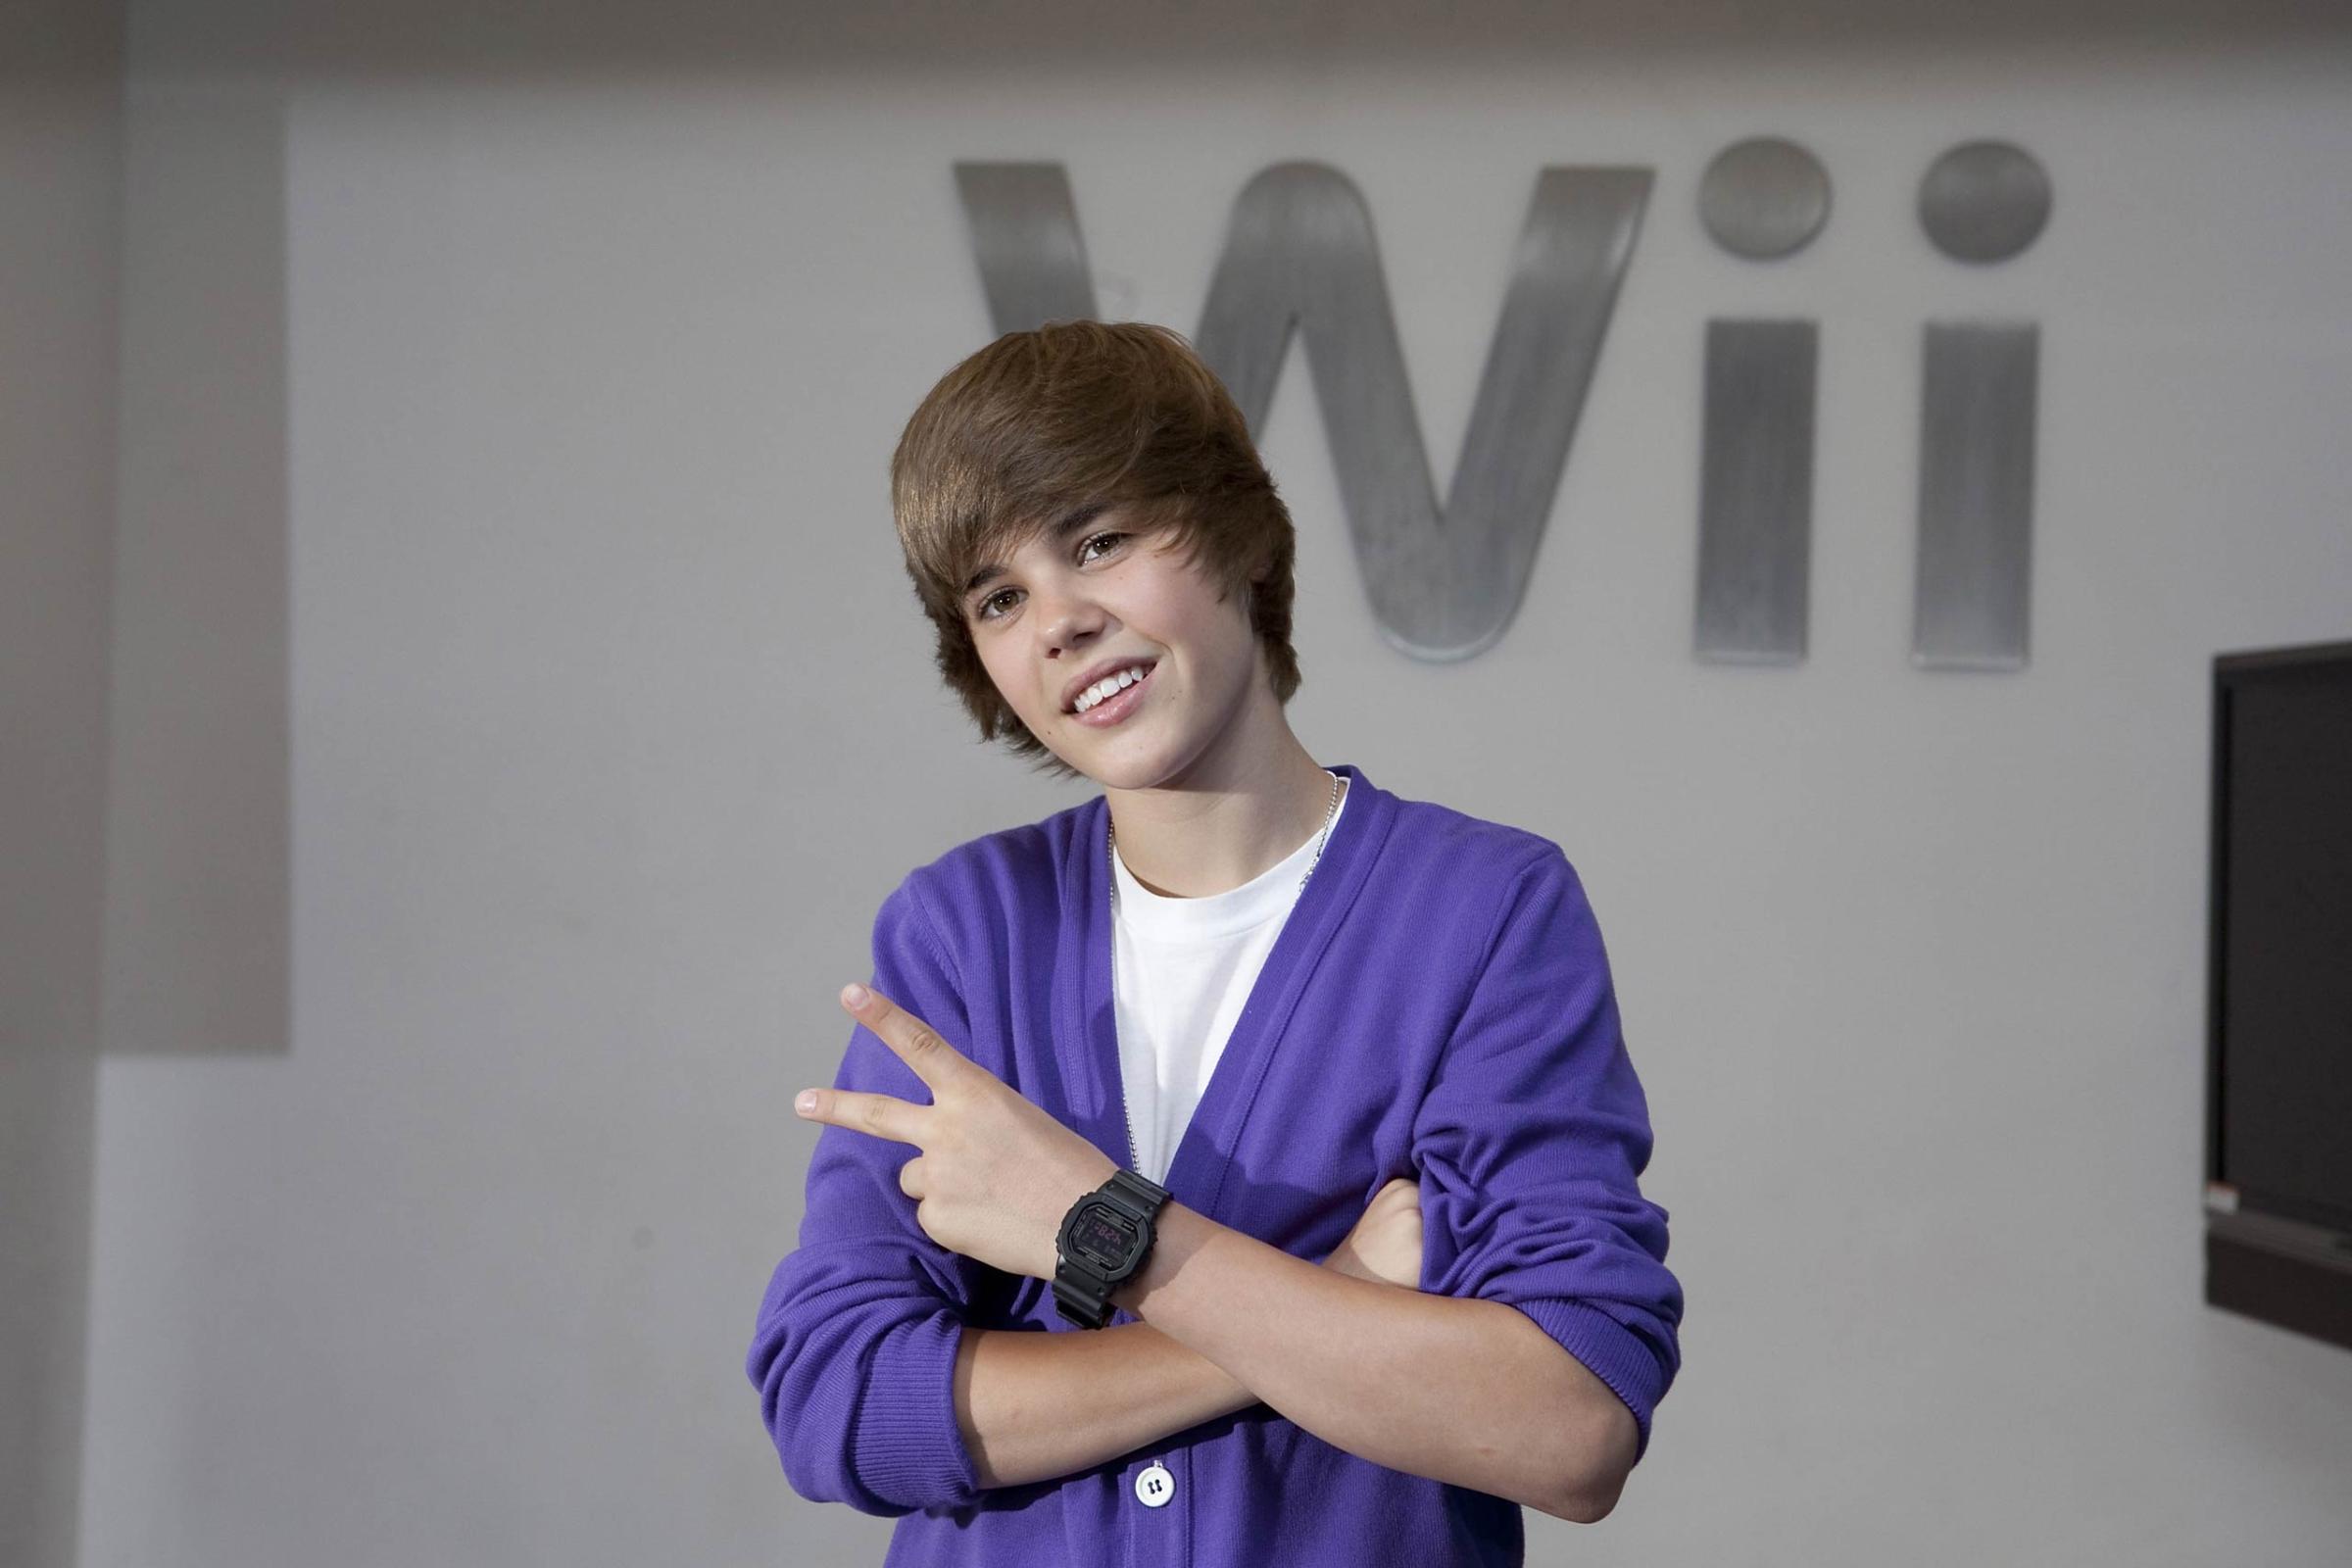 Justin Bieber Visits The Nintendo World Store - September 1, 2009